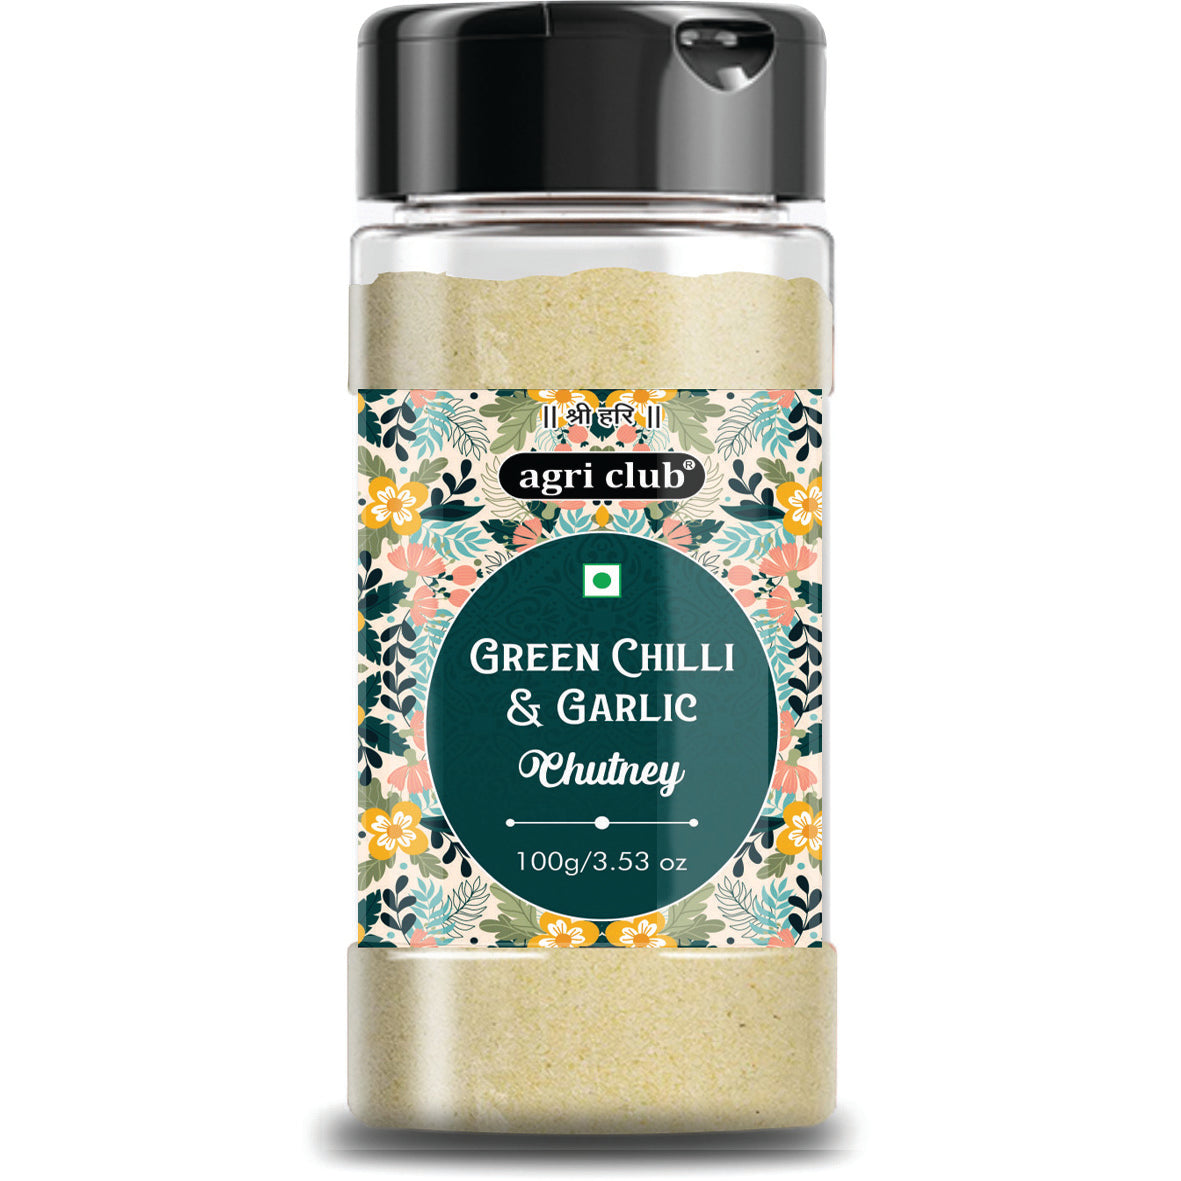 Green Chilli & Garlic Chutney 100% Natural